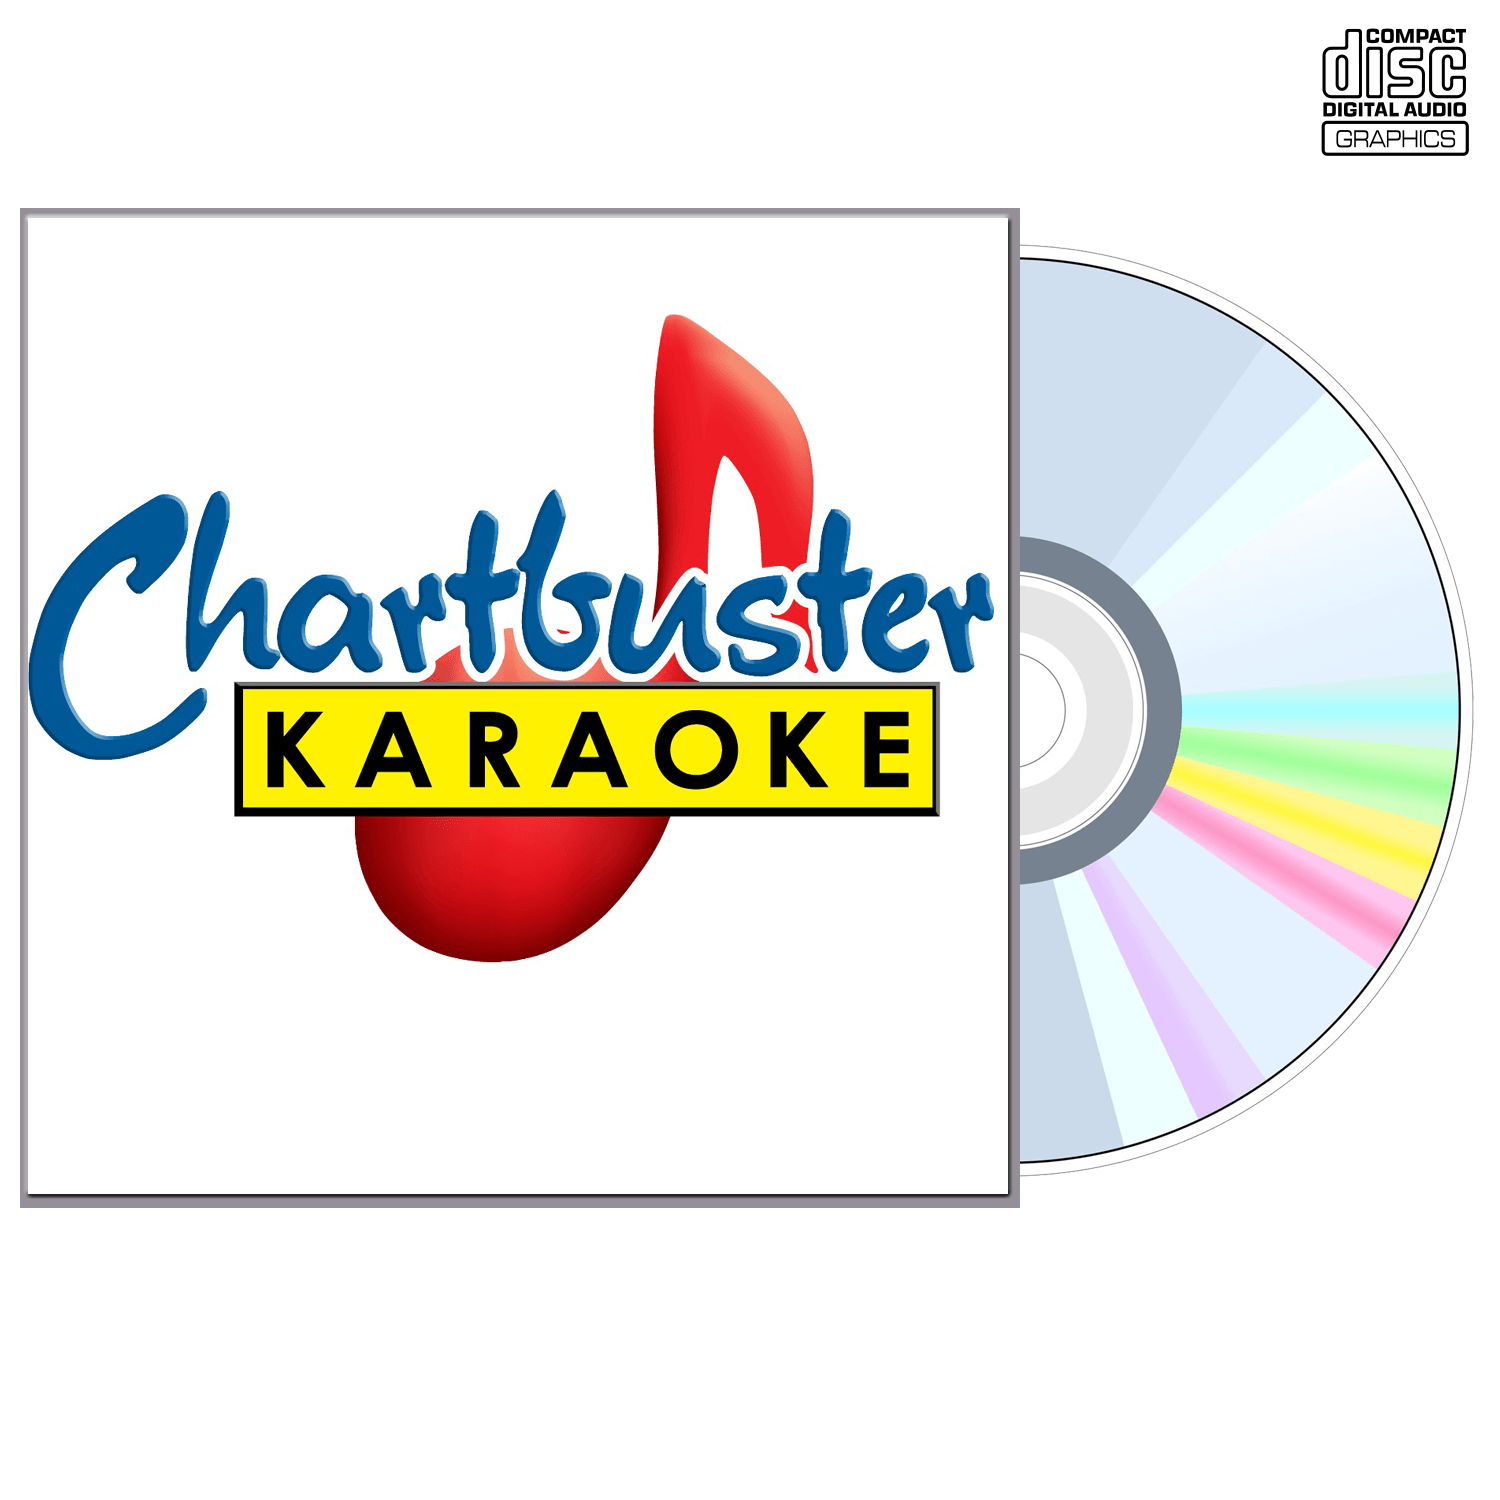 Country Mix Vol 14 - CD+G - Chartbuster Karaoke - Karaoke Home Entertainment